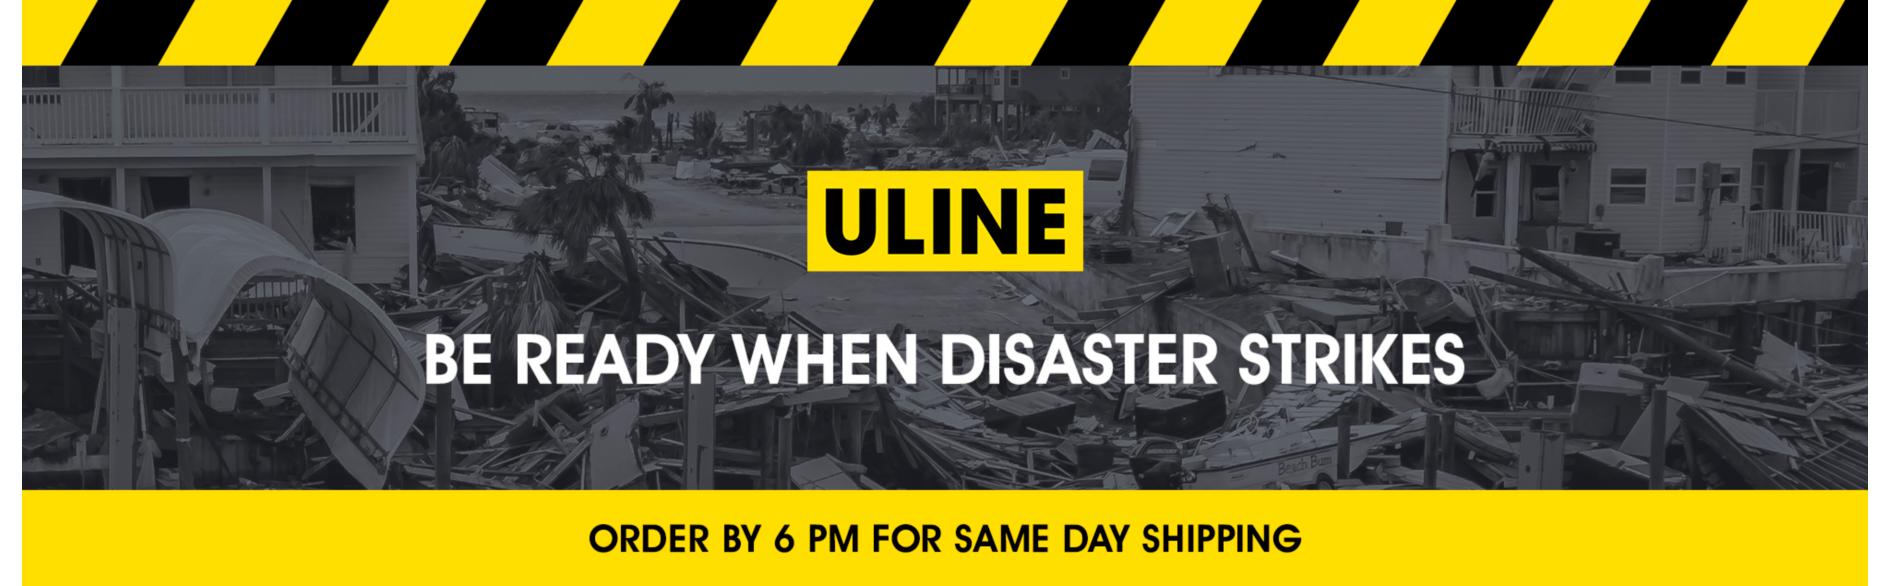 Uline: Disaster Preparedness